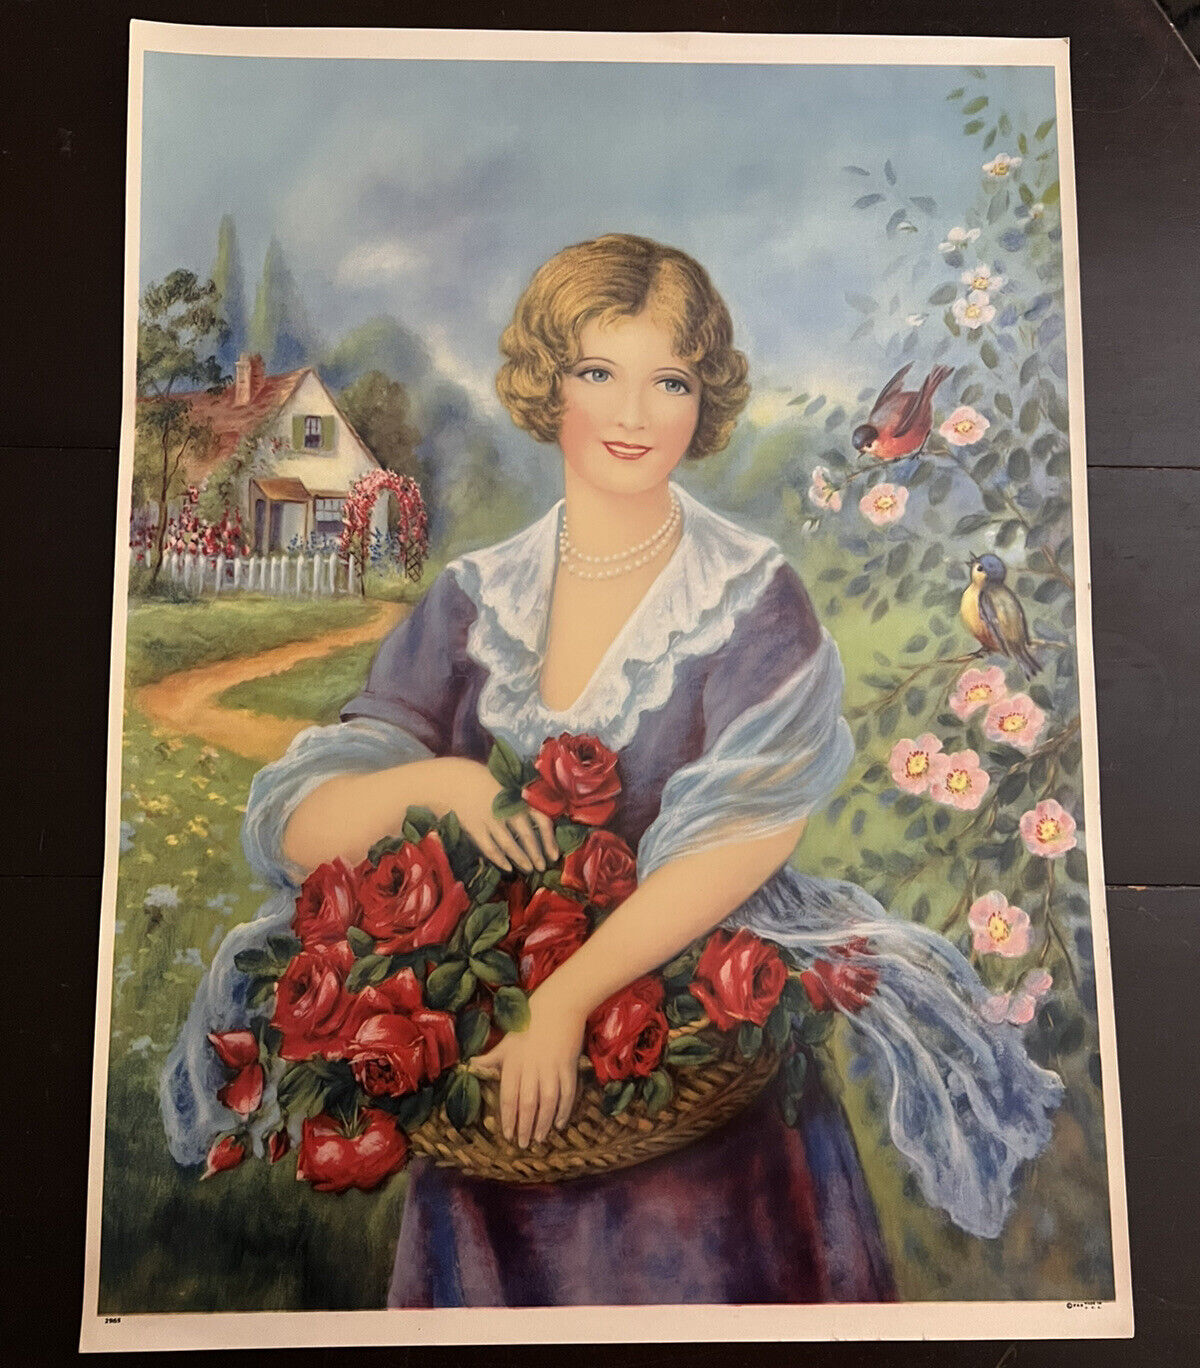 ATQ 1920s Litho Calendar Sales Sample Print Blonde WOMAN Holding Roses 15 X 20